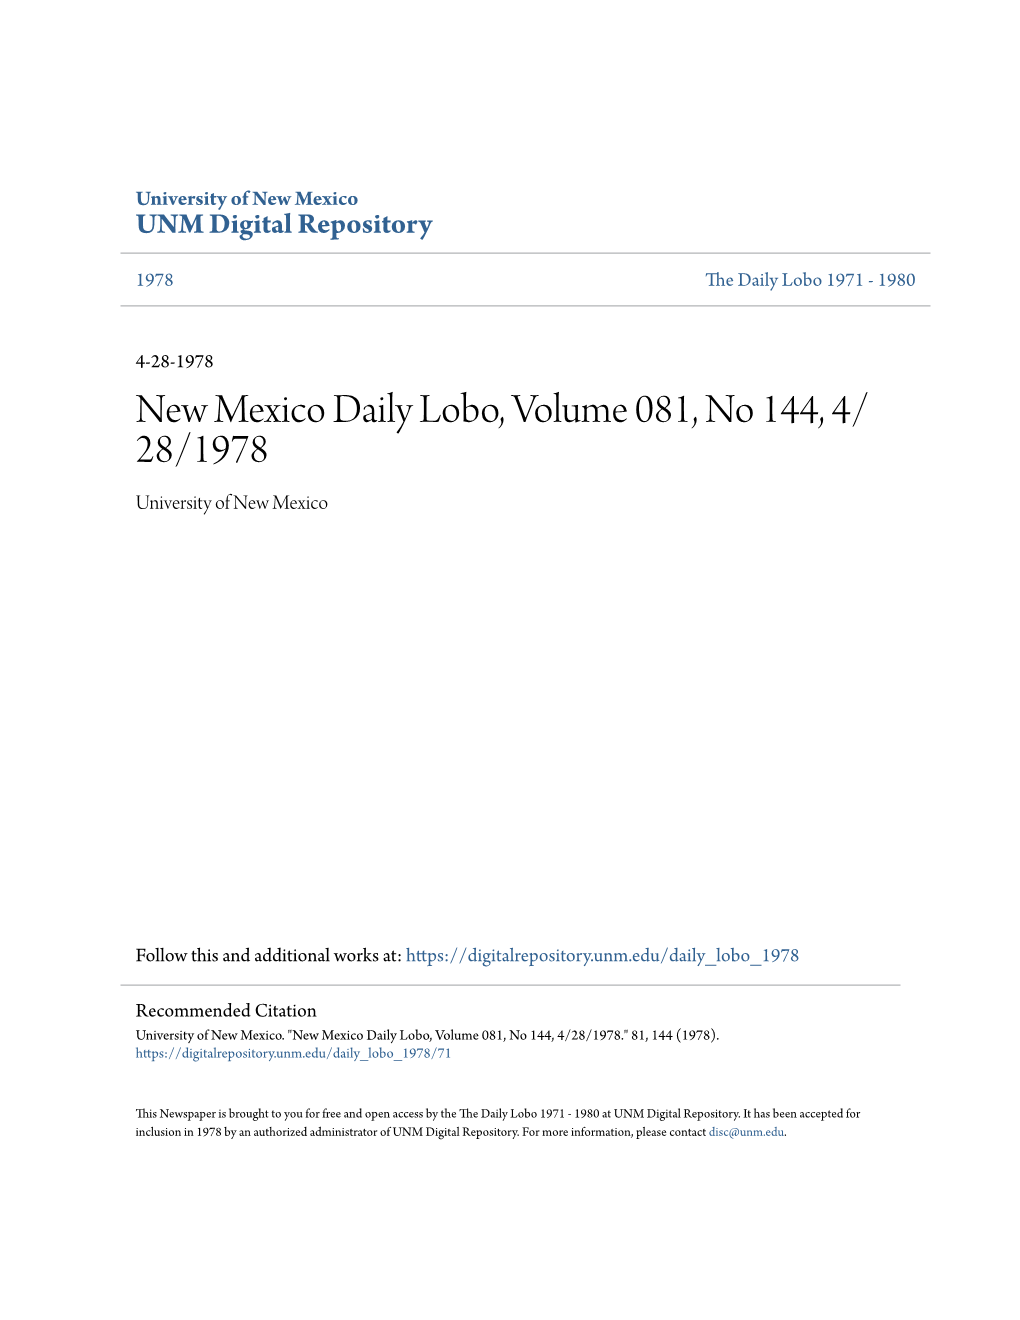 New Mexico Daily Lobo, Volume 081, No 144, 4/28/1978." 81, 144 (1978)